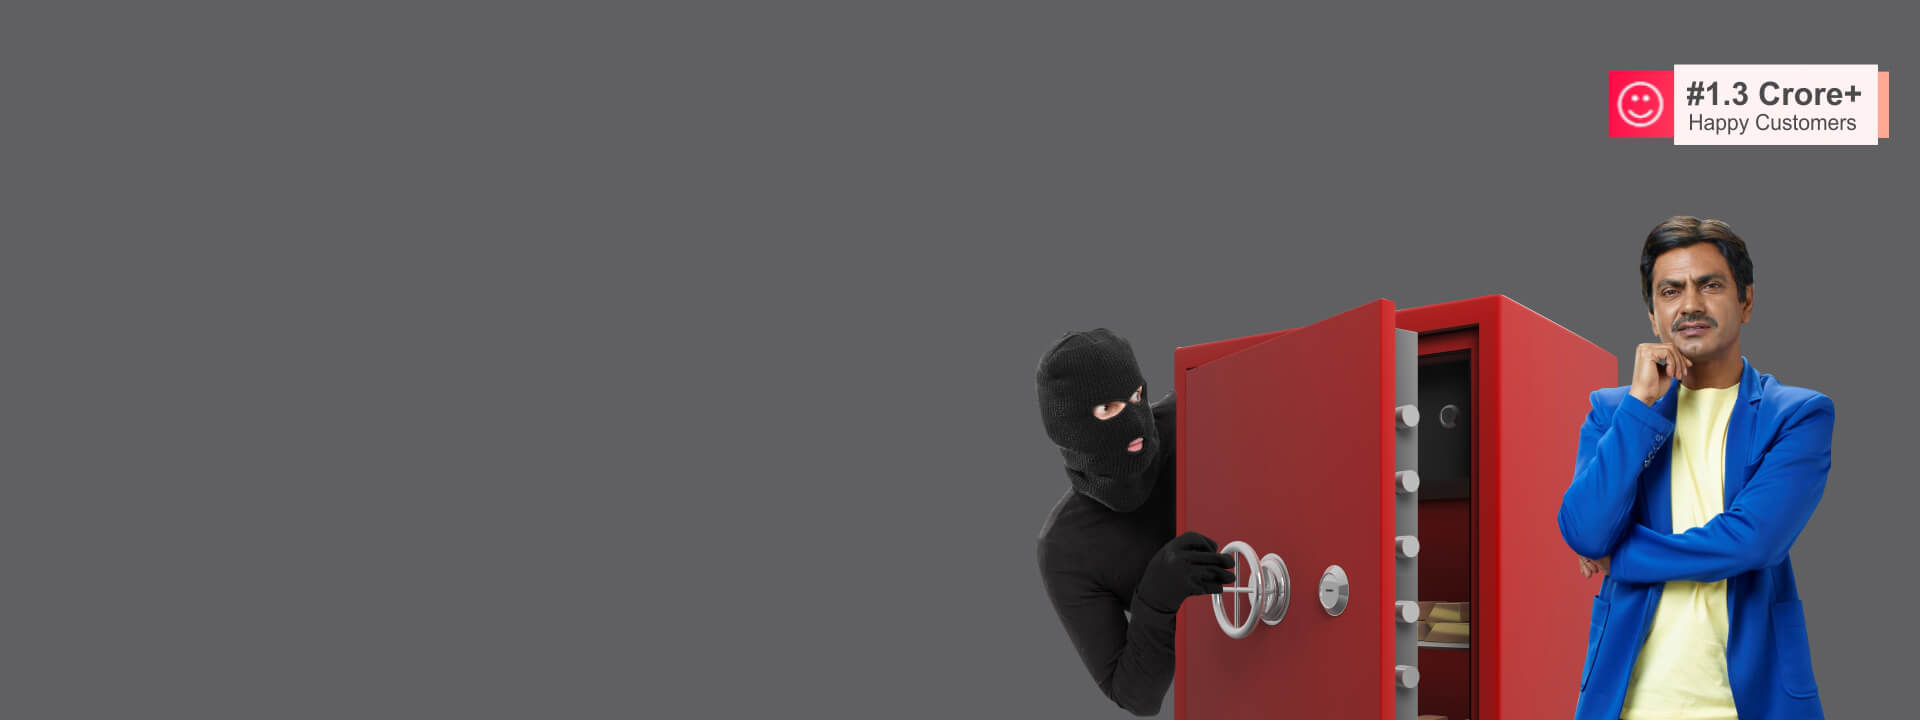 Burglary Insurance | Theft Insurance Policy | Home ...